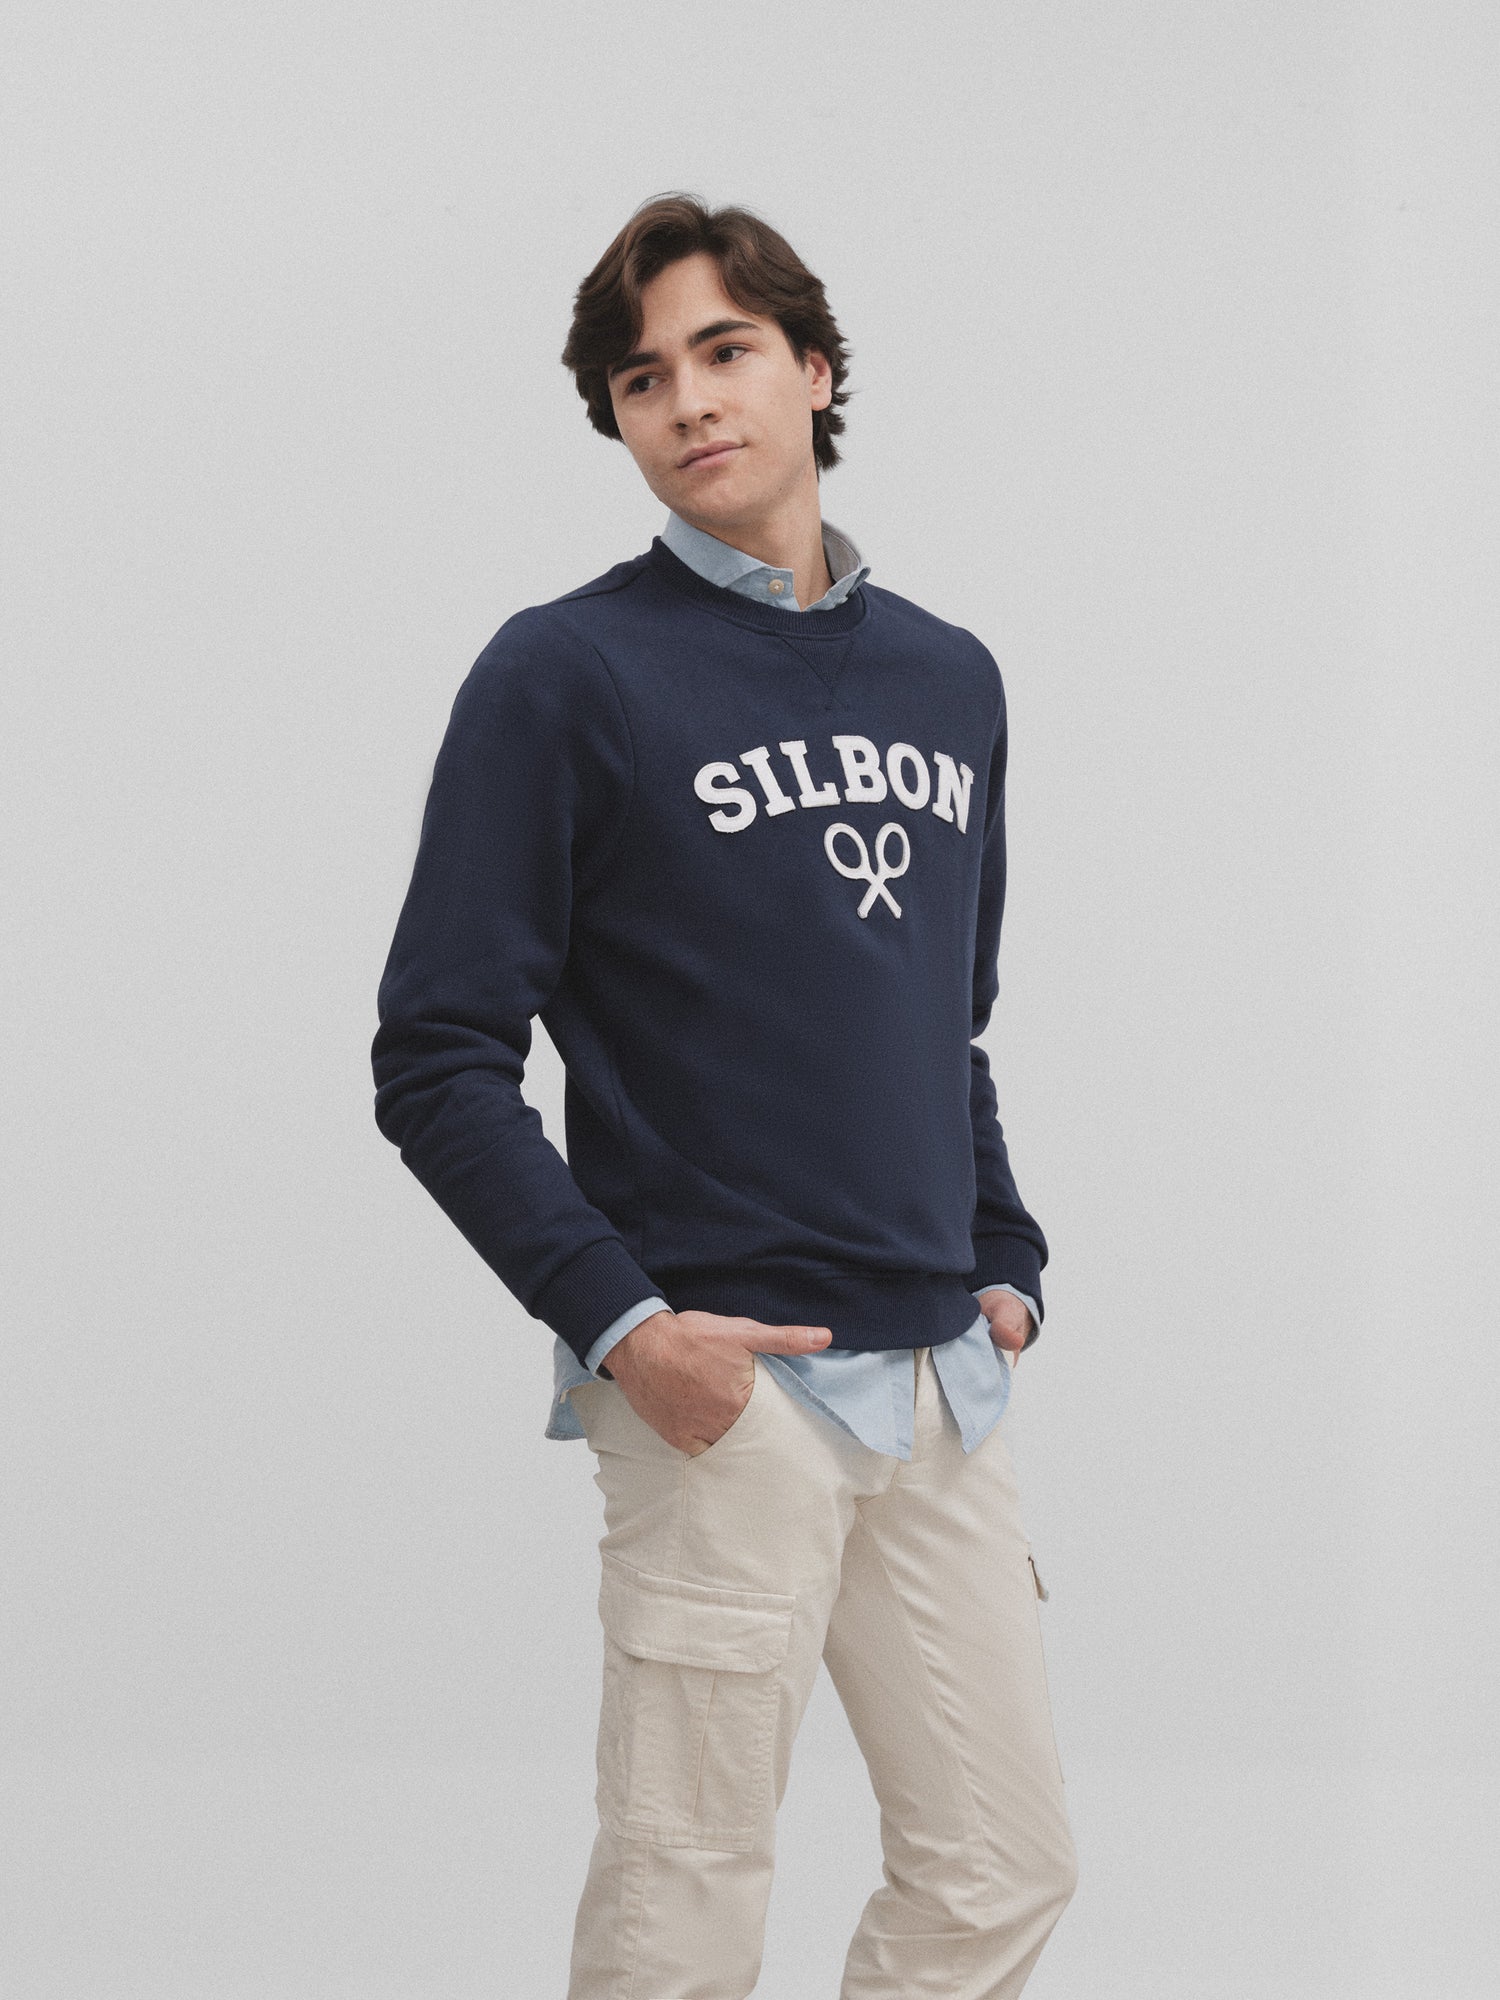 Silbon medium navy blue racket sweatshirt